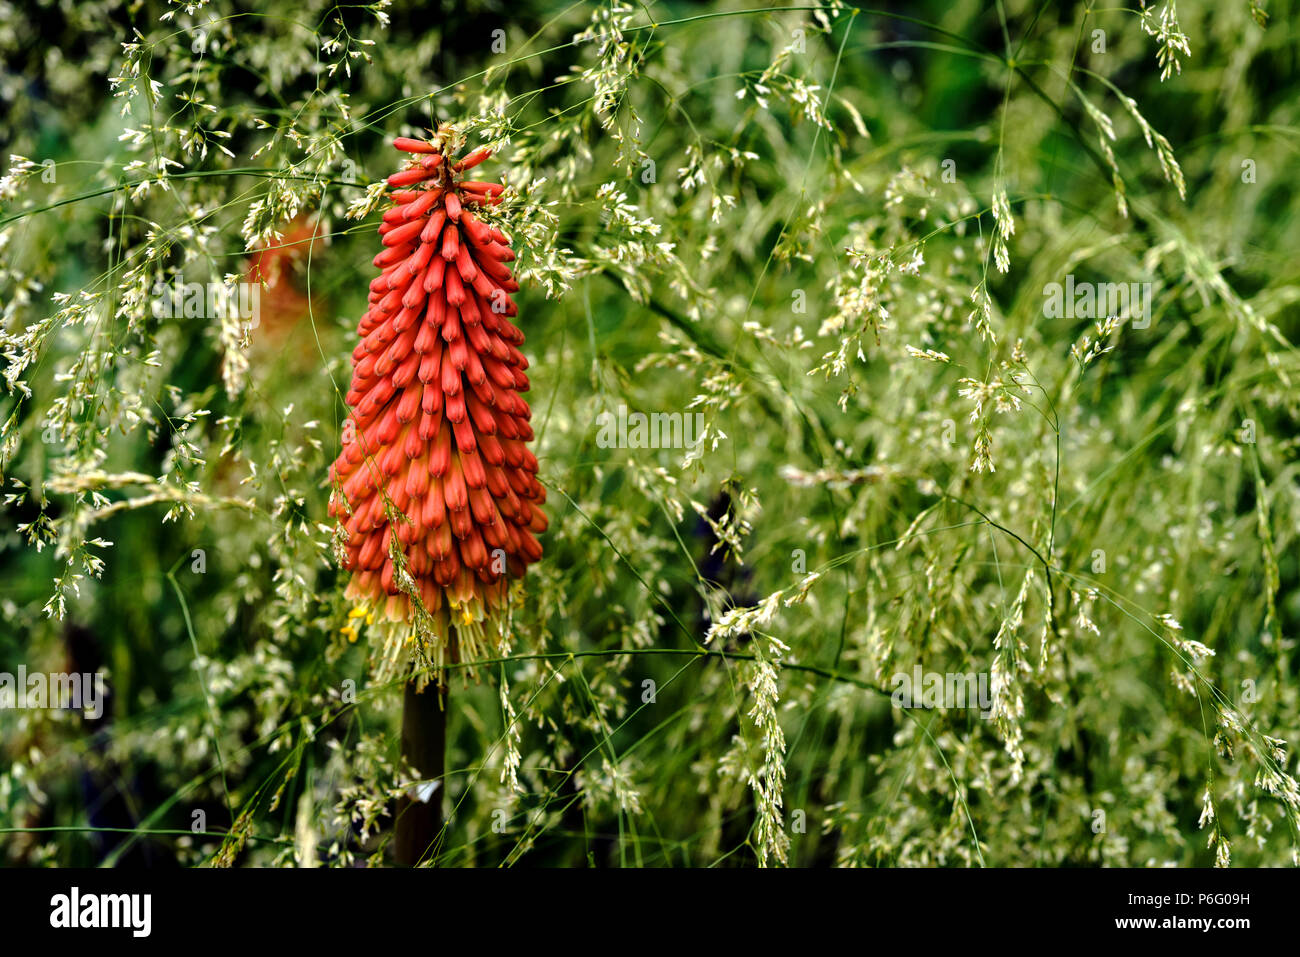 Kniphofia uvaria Nobilis , Red Hot Poker, Torch Lily, asphodelaceae, liliaceae, Deschampsia cespitosa Goldtau, Tufted Hairgrass.Cottage garden border. Stock Photo